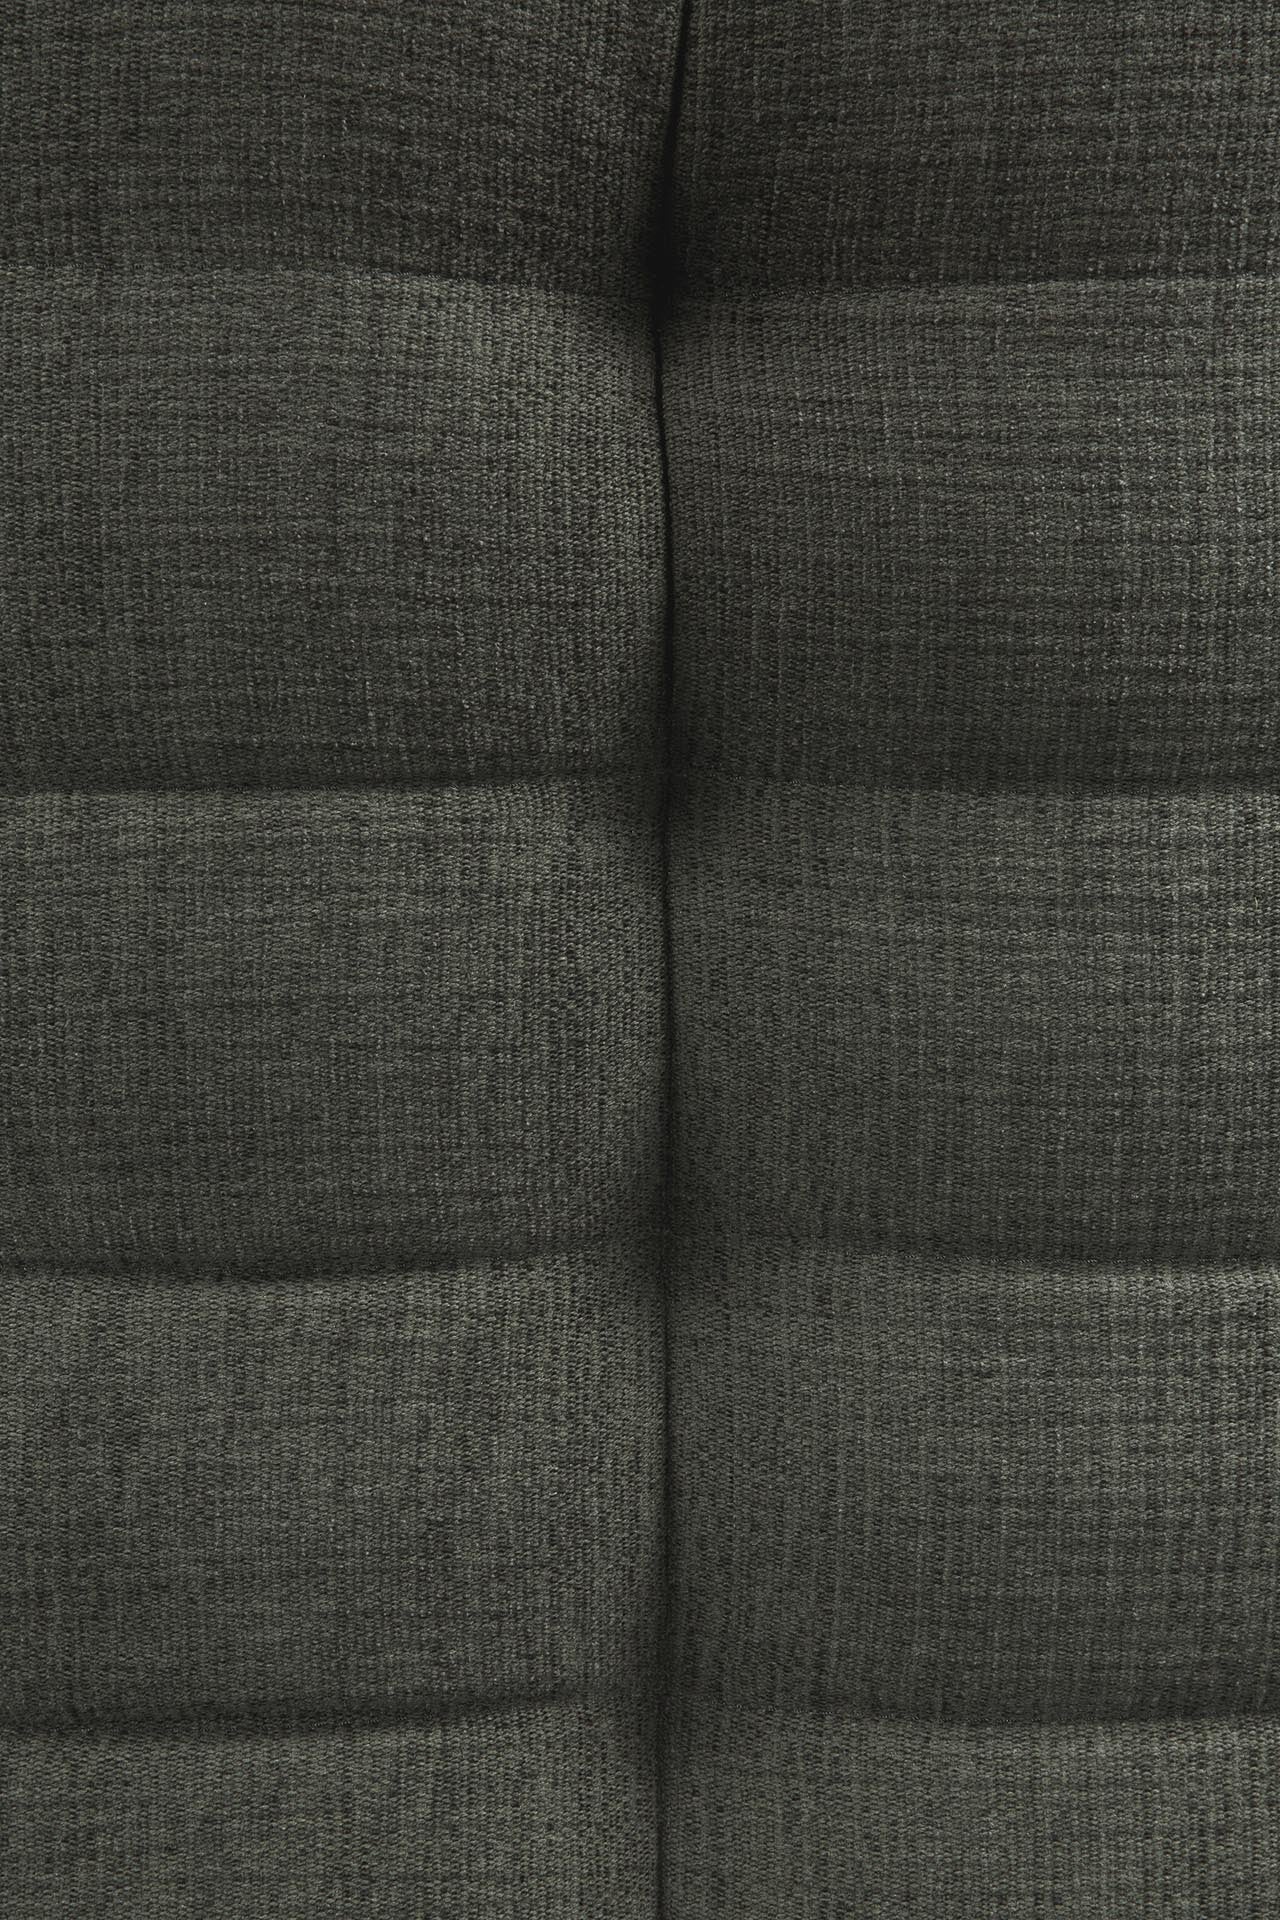 N701 2 Seater Eco Fabric Sofa, Moss